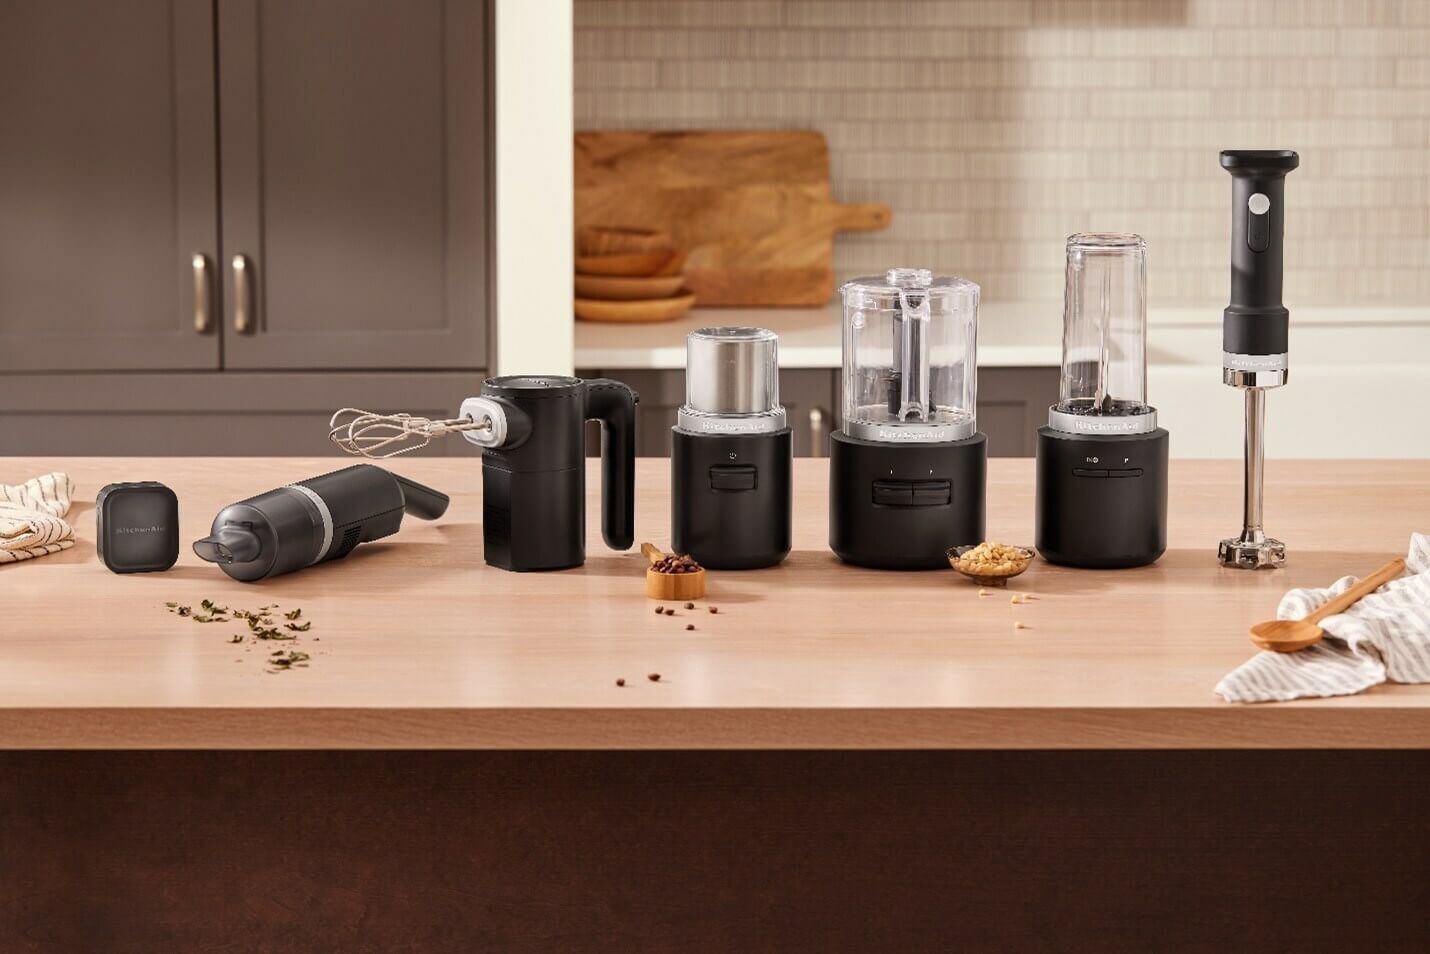 KitchenAid Go cordless rechargeable small appliances.